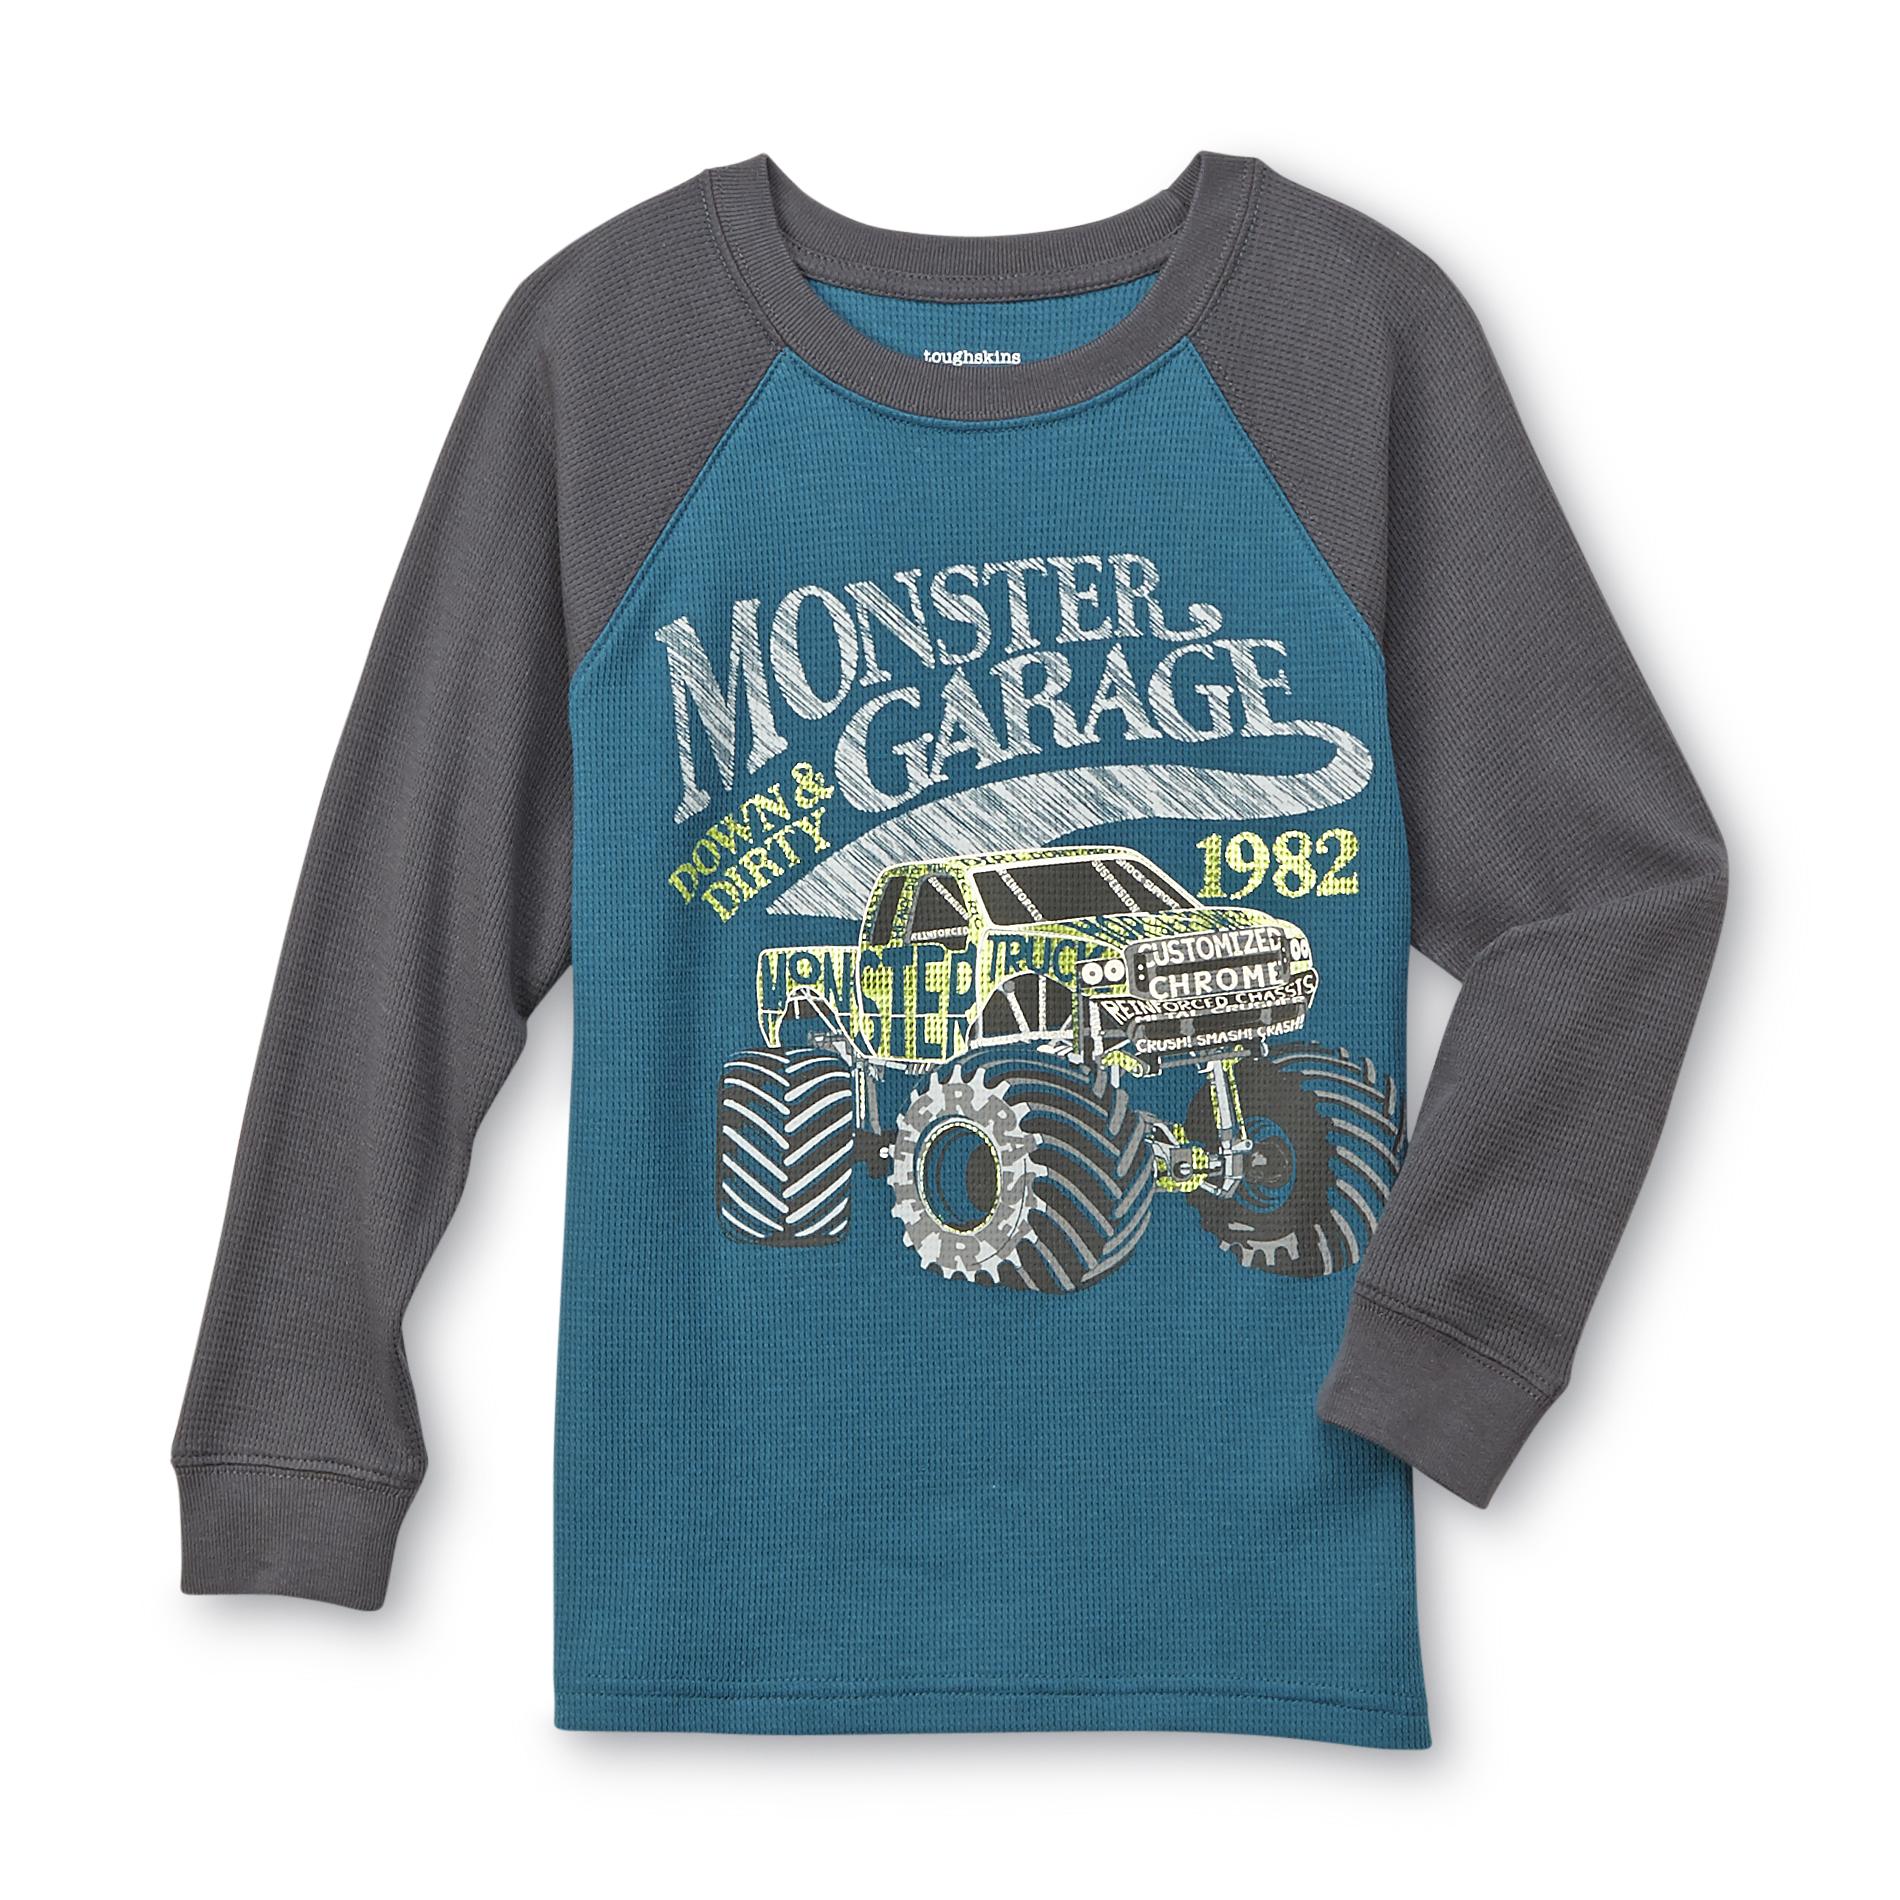 Toughskins Boy's Thermal Graphic Shirt - Monster Truck